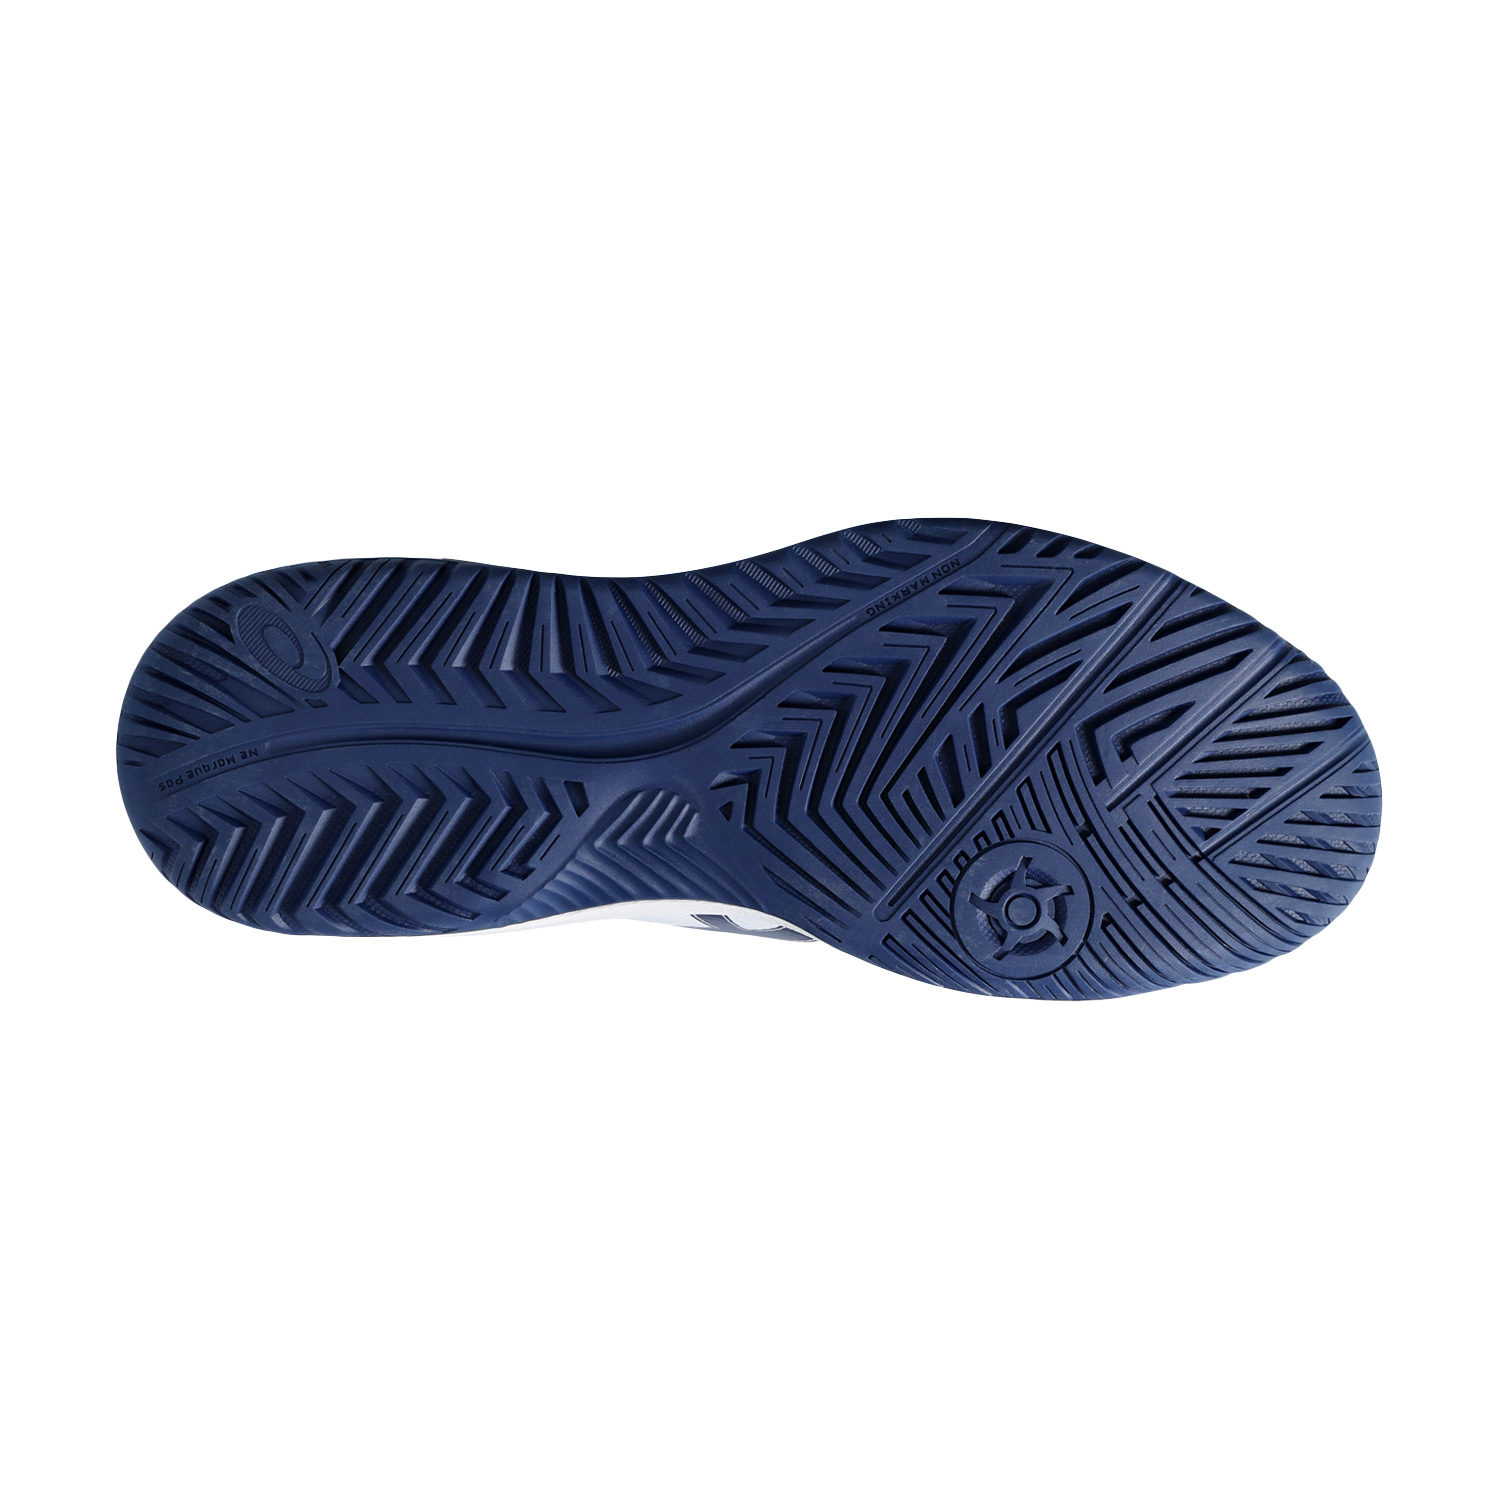 Asics Gel Dedicate 8 Men's Tennis Shoes - White/Blue Expanse